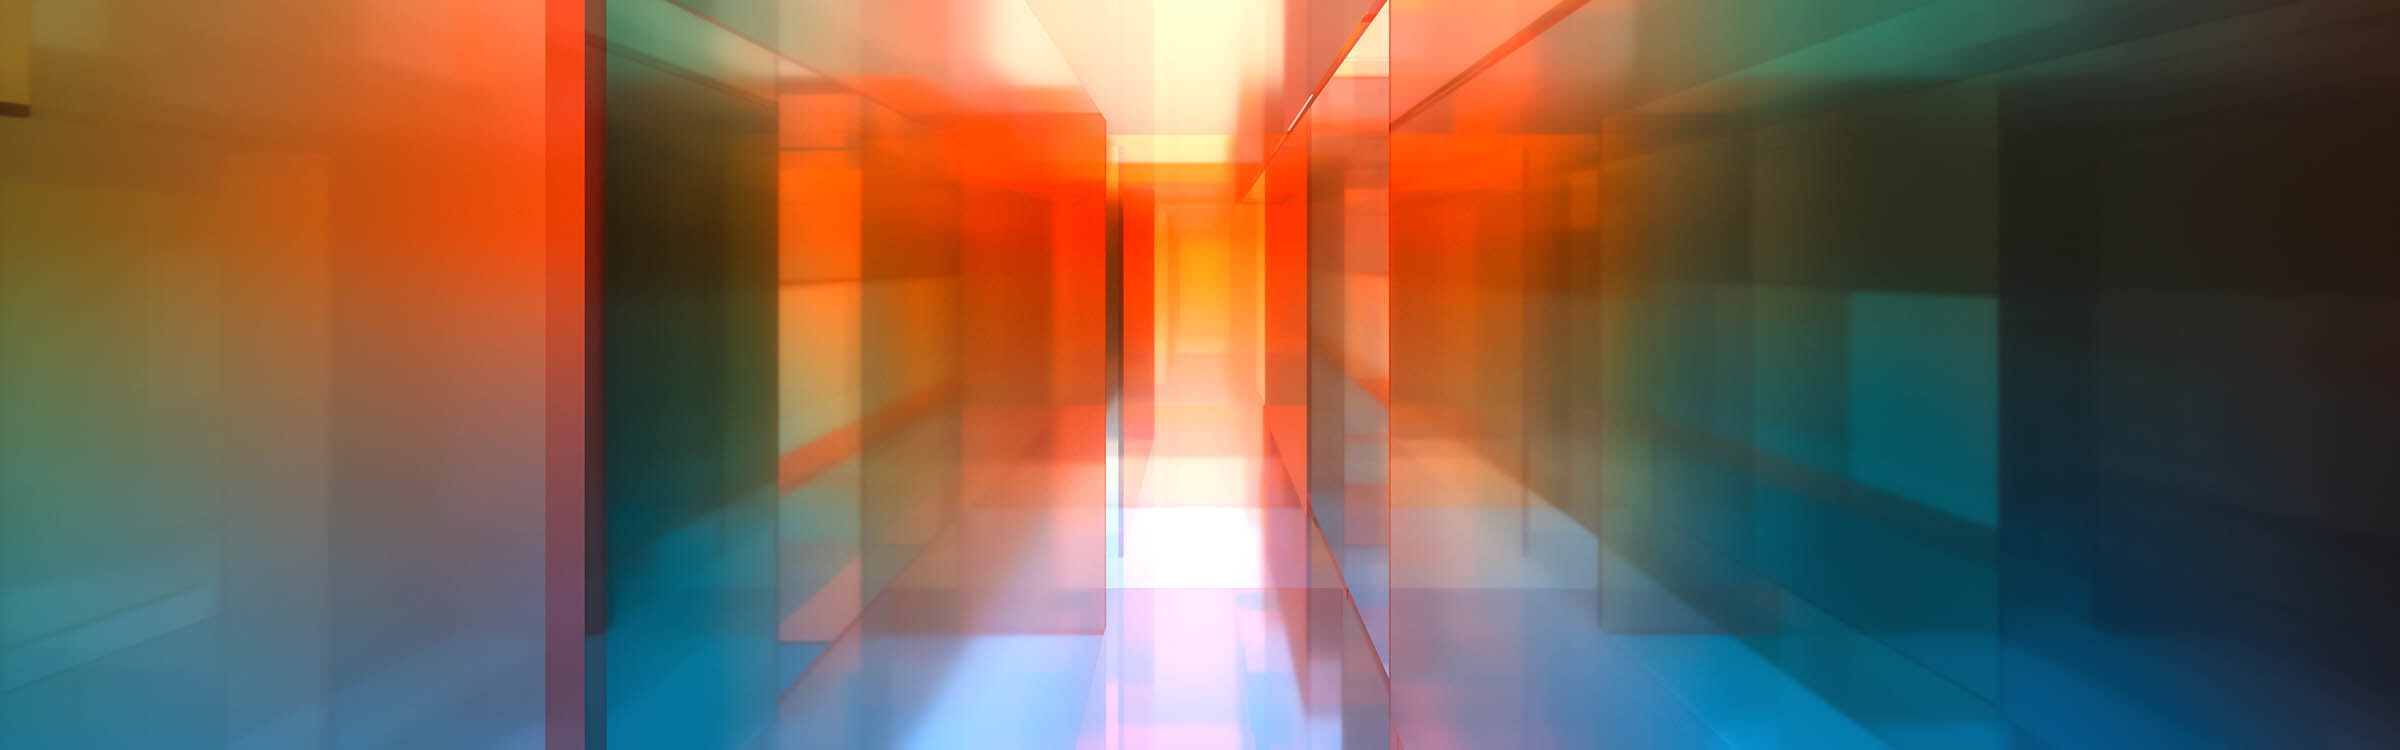 Image of orange and blue glass blocks